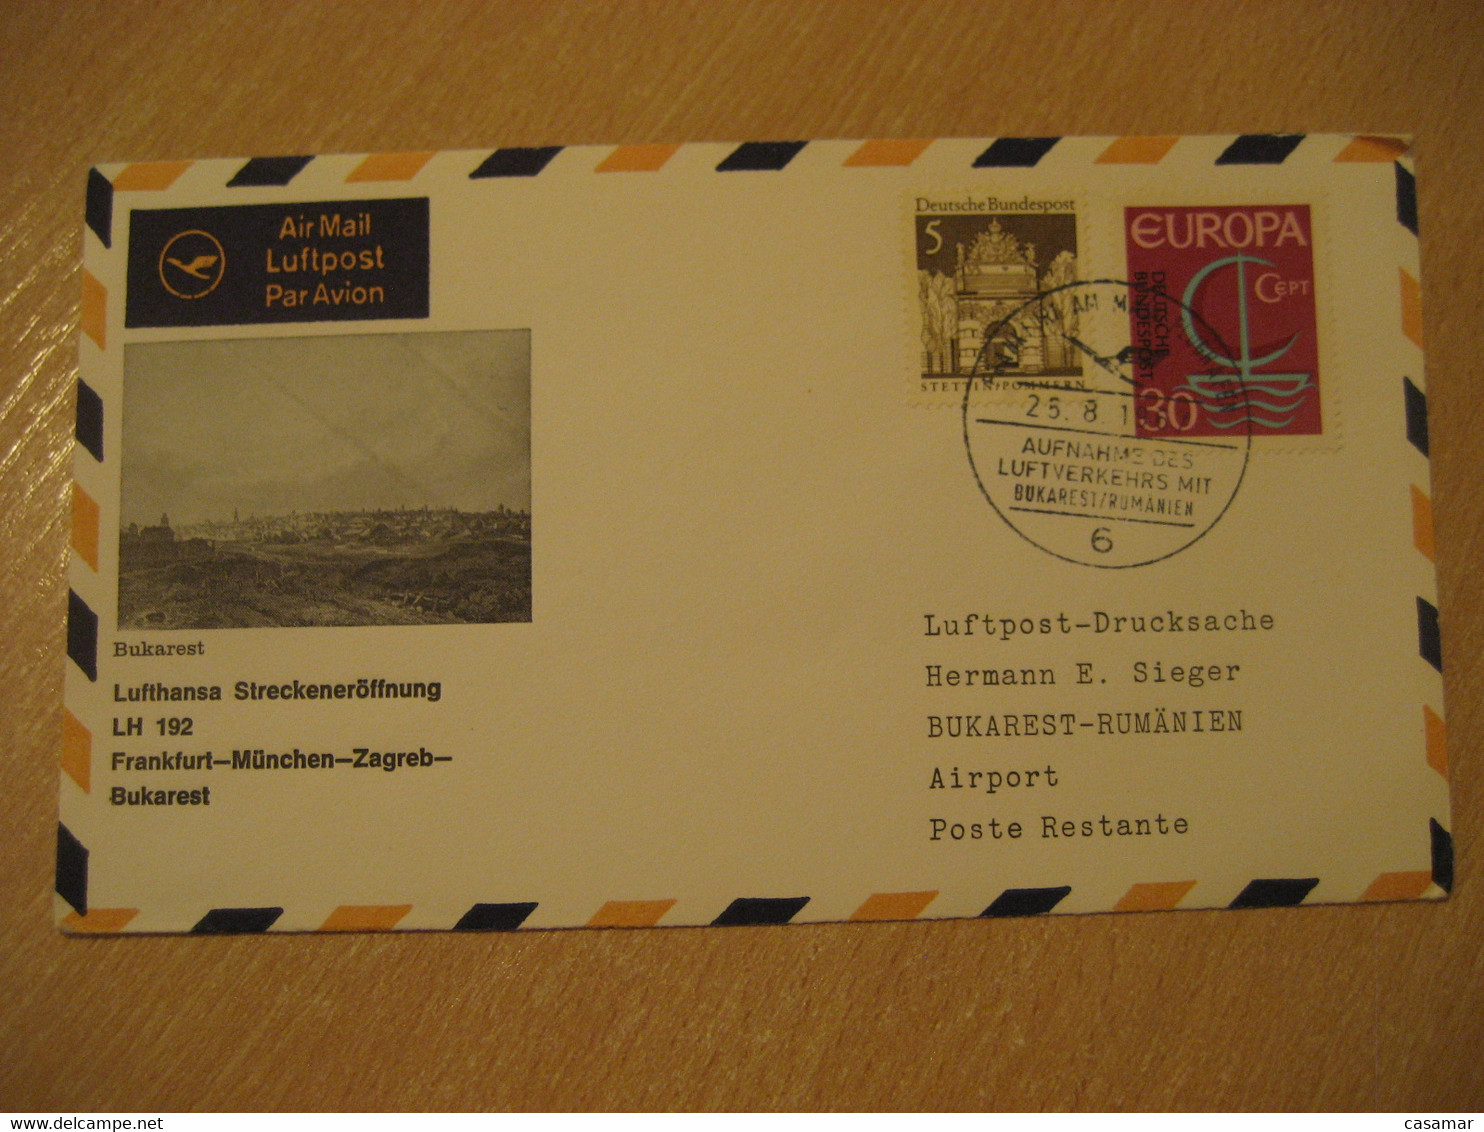 BUCHAREST Zagreb Munich Frankfurt 1967 Lufthansa Airlines First Flight Cancel Cover ROMANIA YUGOSLAVIA CROATIA GERMANY - Covers & Documents